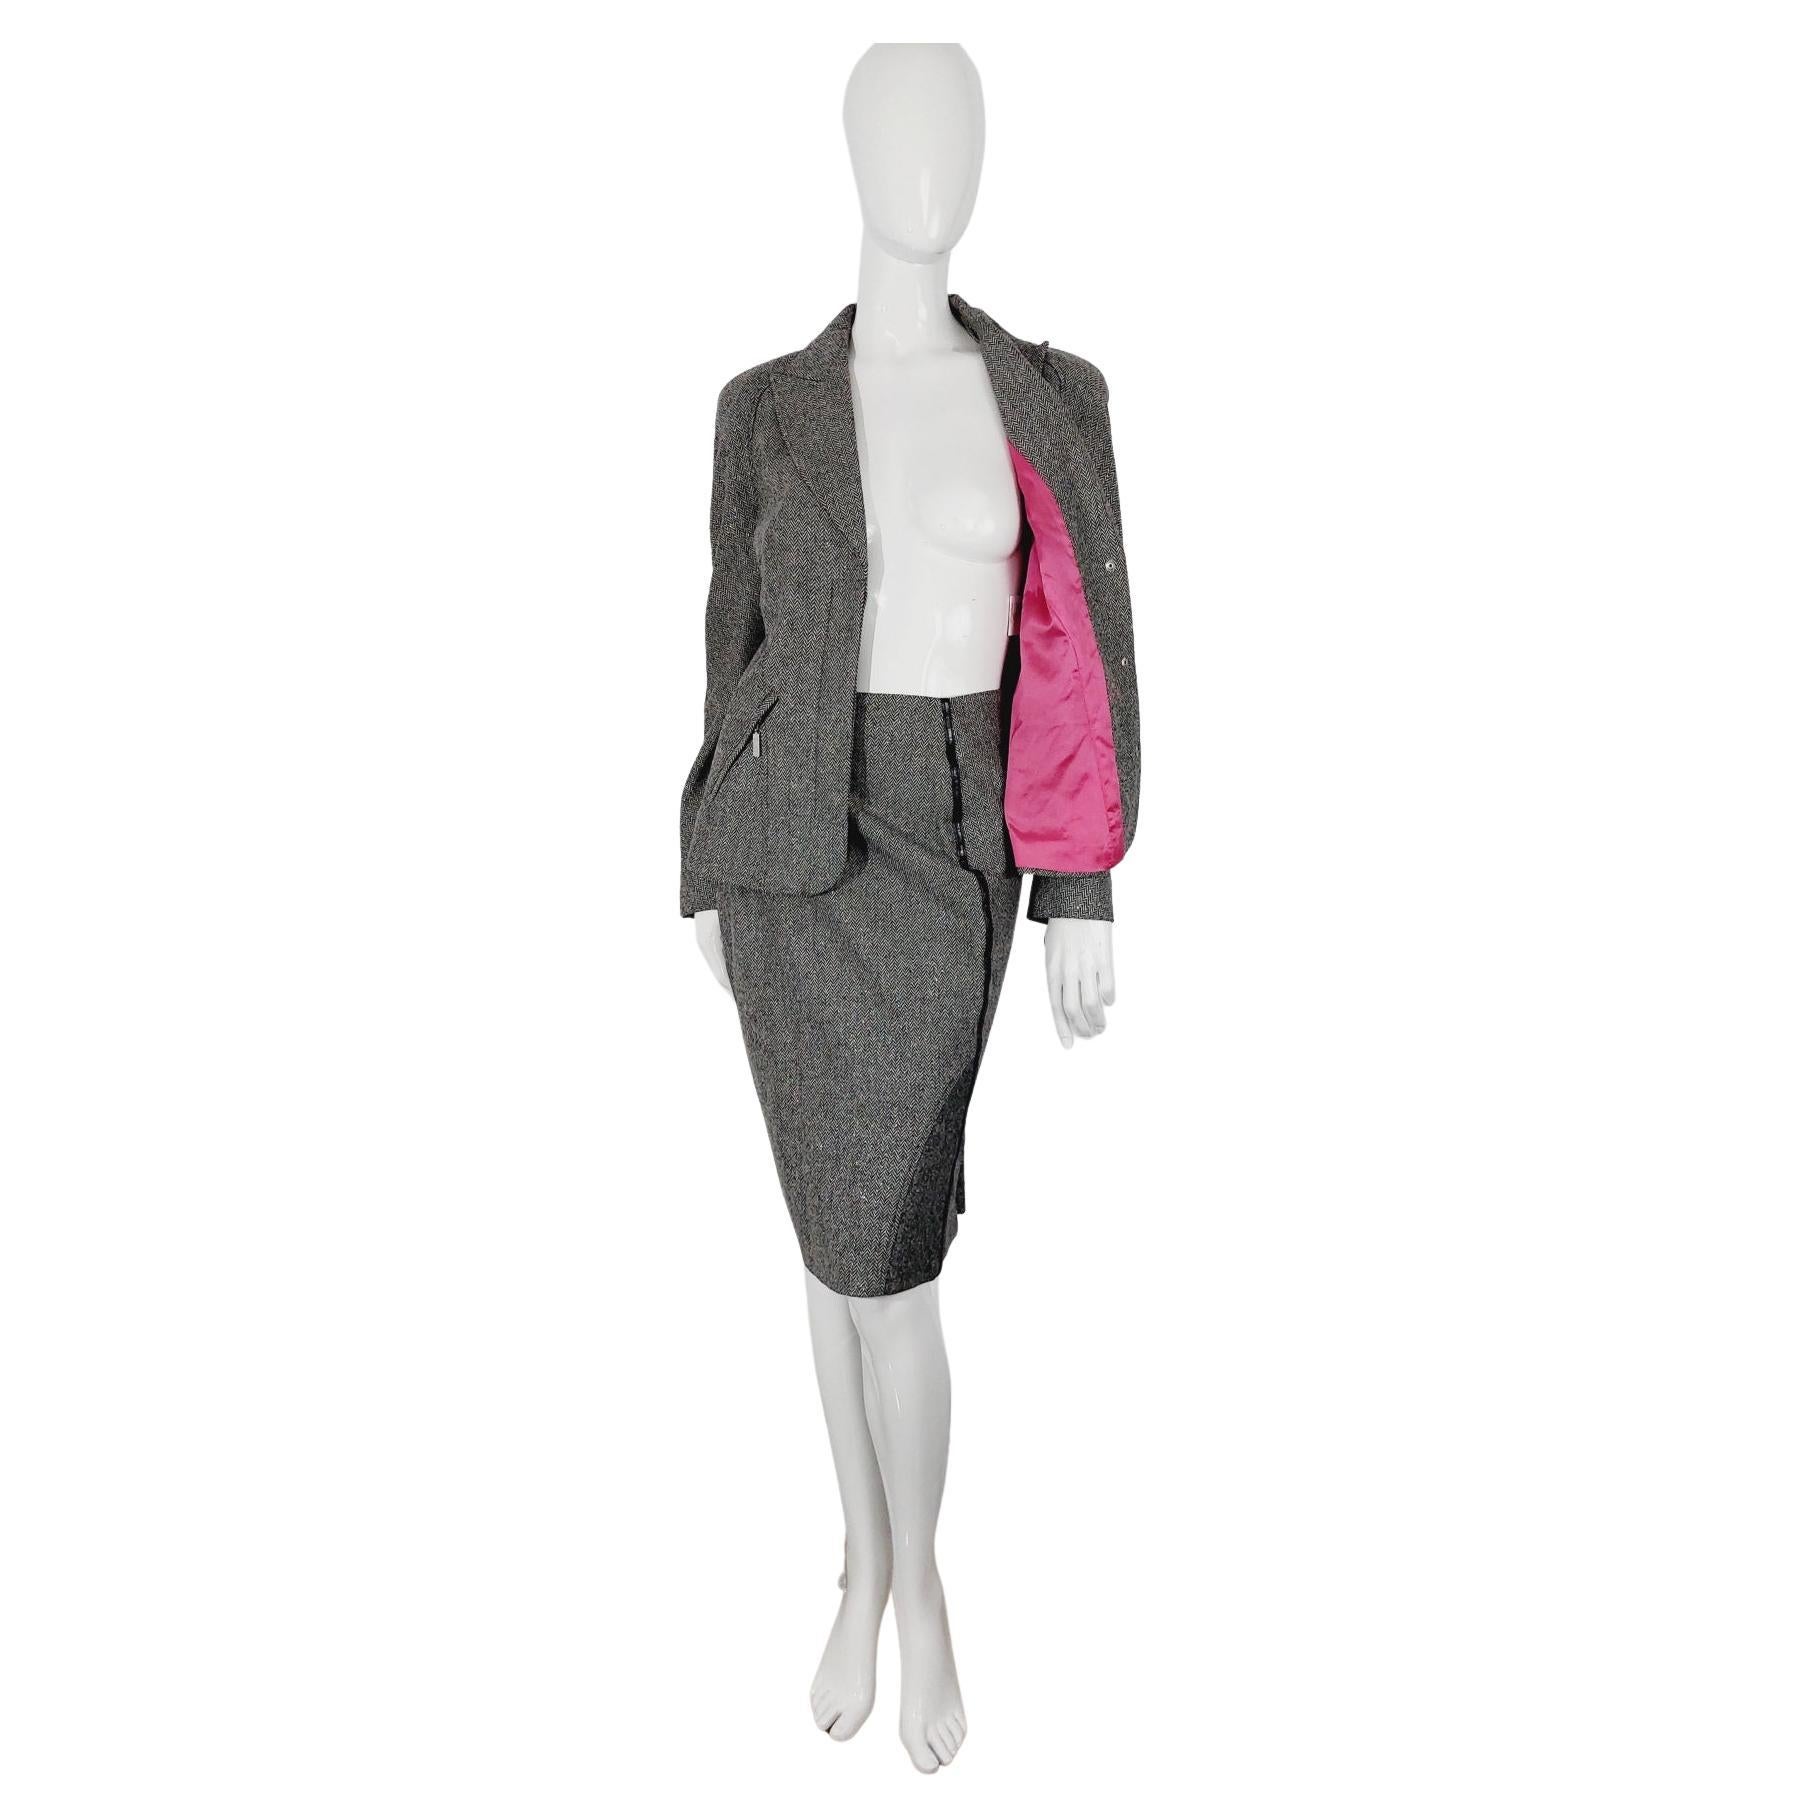 Thierry Mugler Pink Grey Shiny Jacket Gleam Sparkling Skirt Blazer Fomral Suit